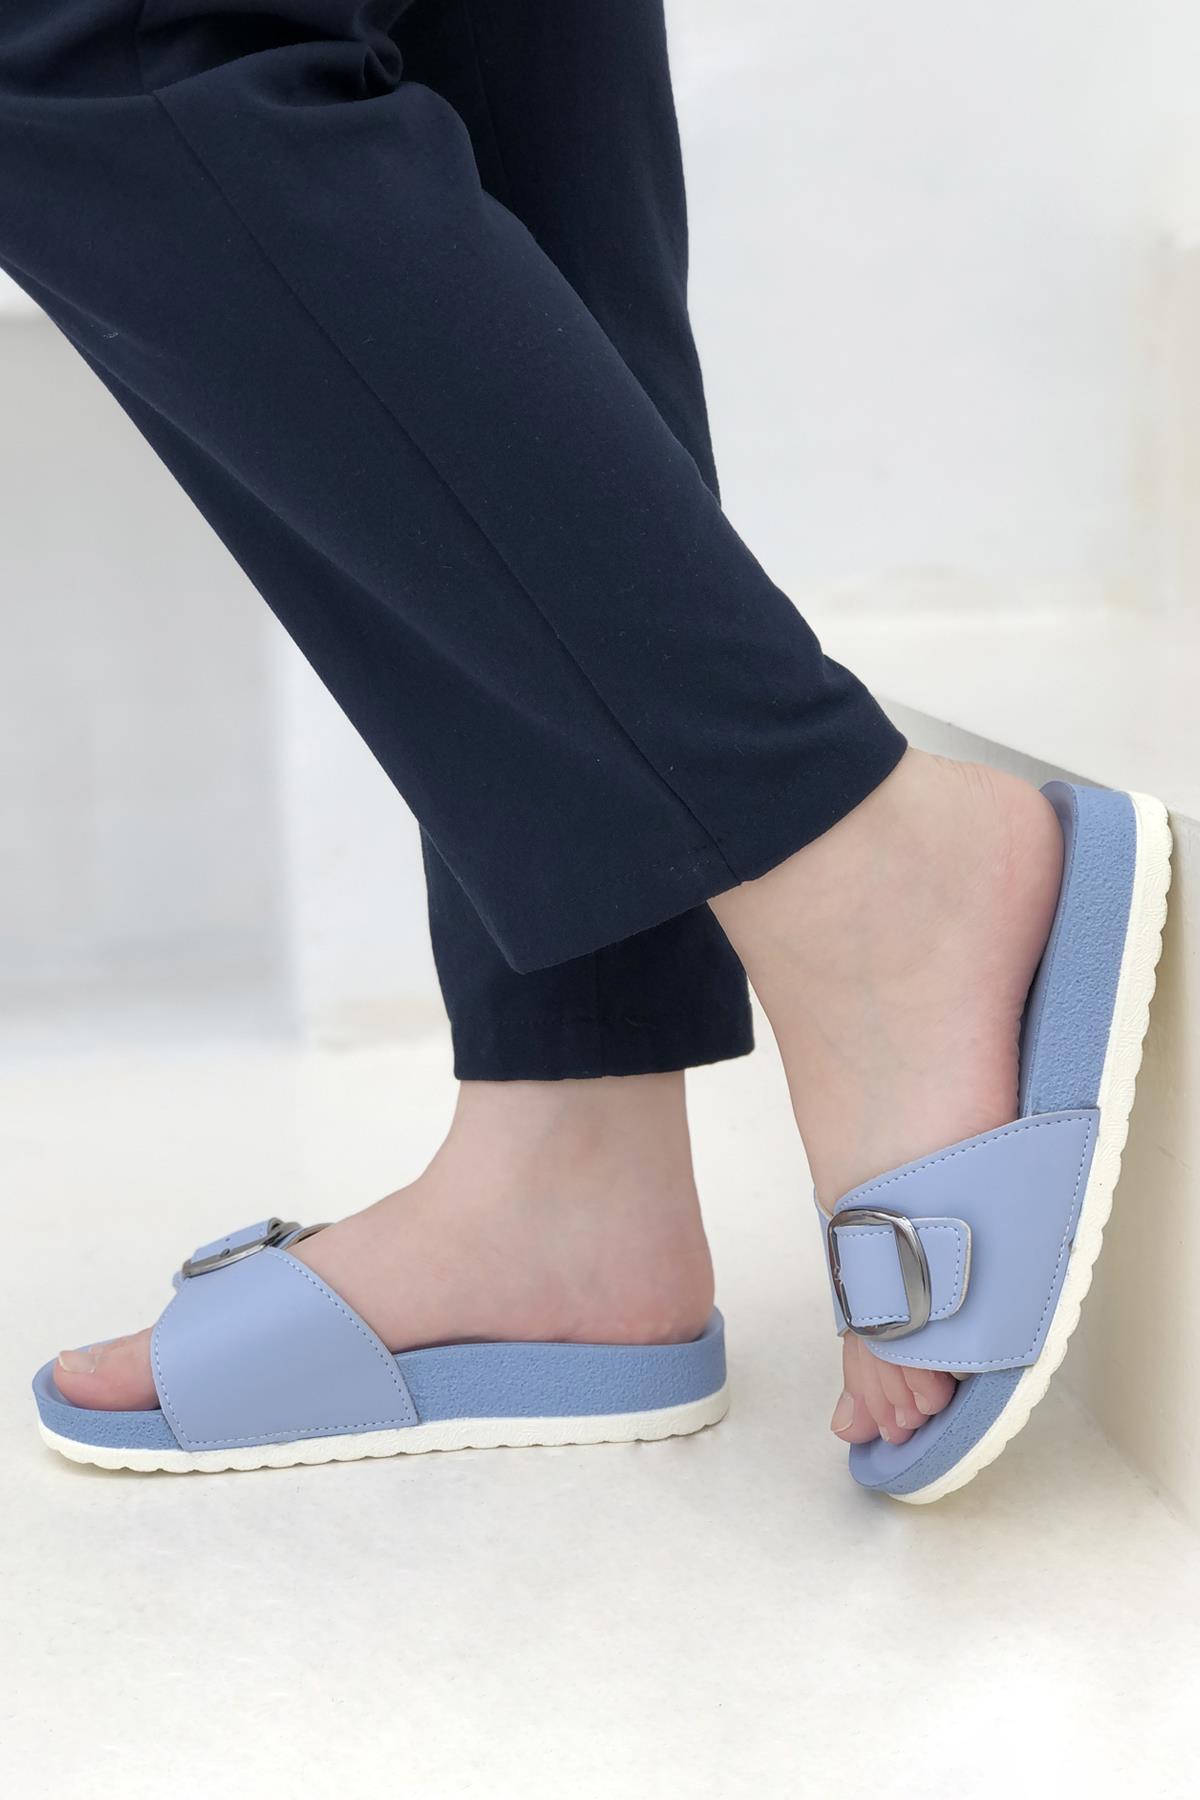 Kadın Terlik Mavi PİEN 22701 Pienn | Mybella Shoes